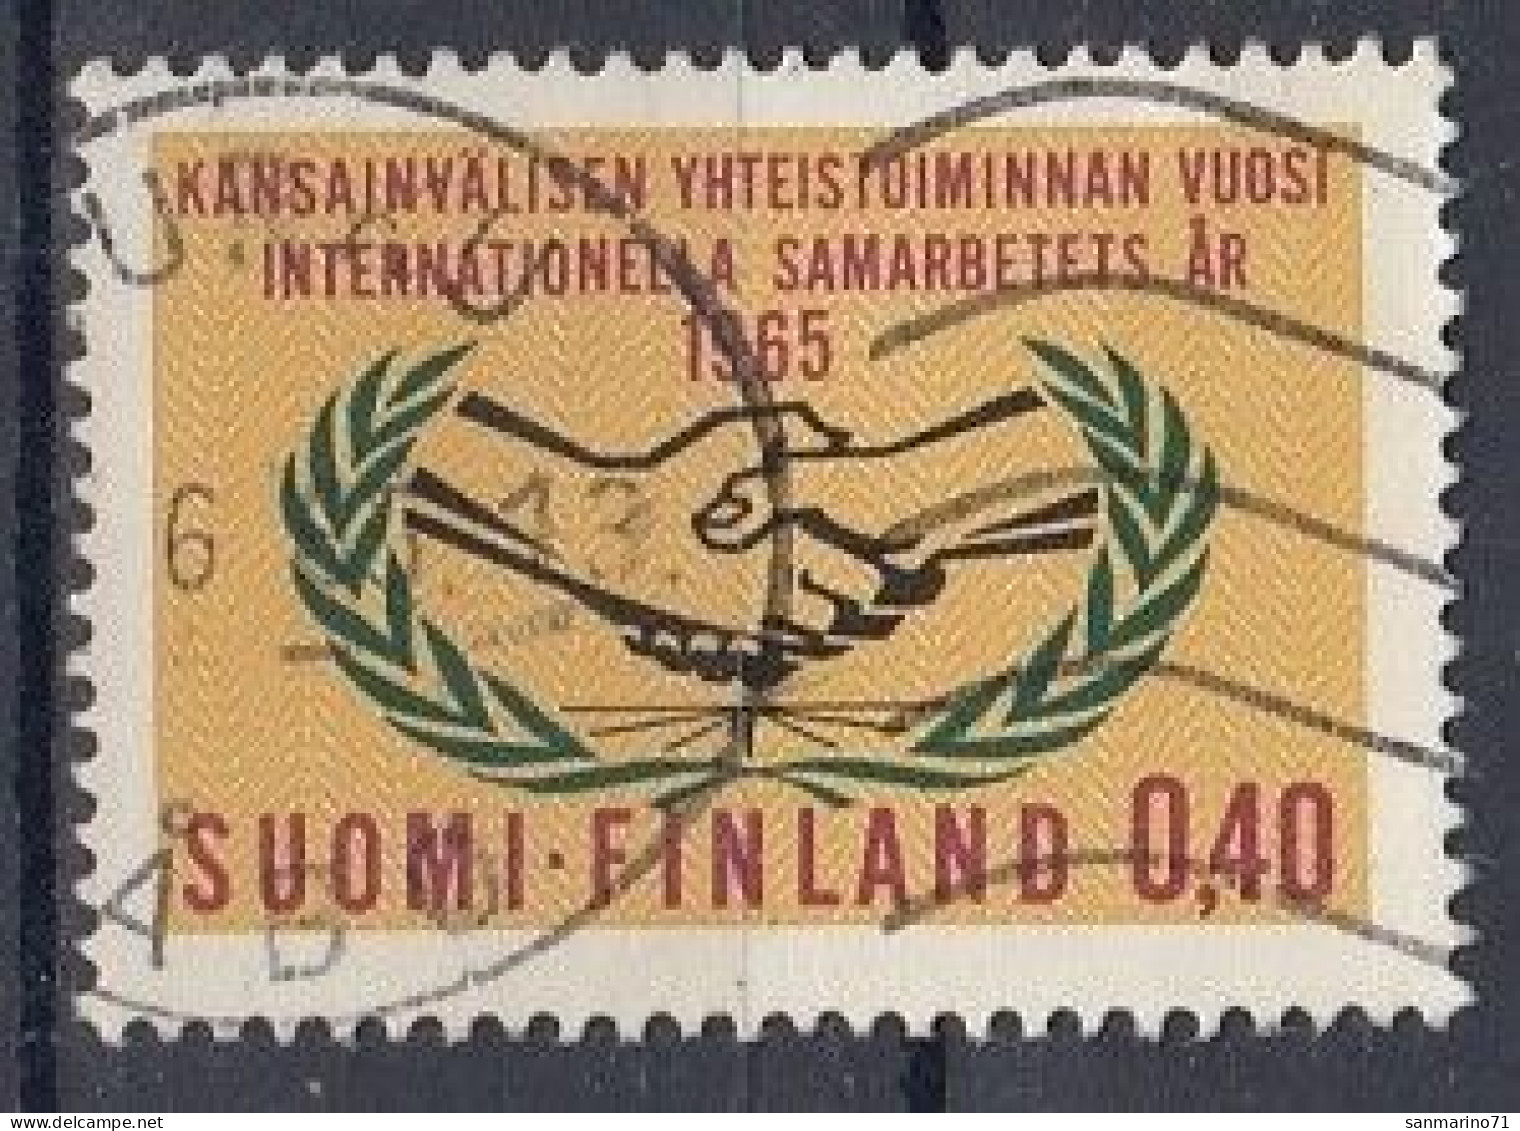 FINLAND 597,used,falc Hinged - Gebruikt